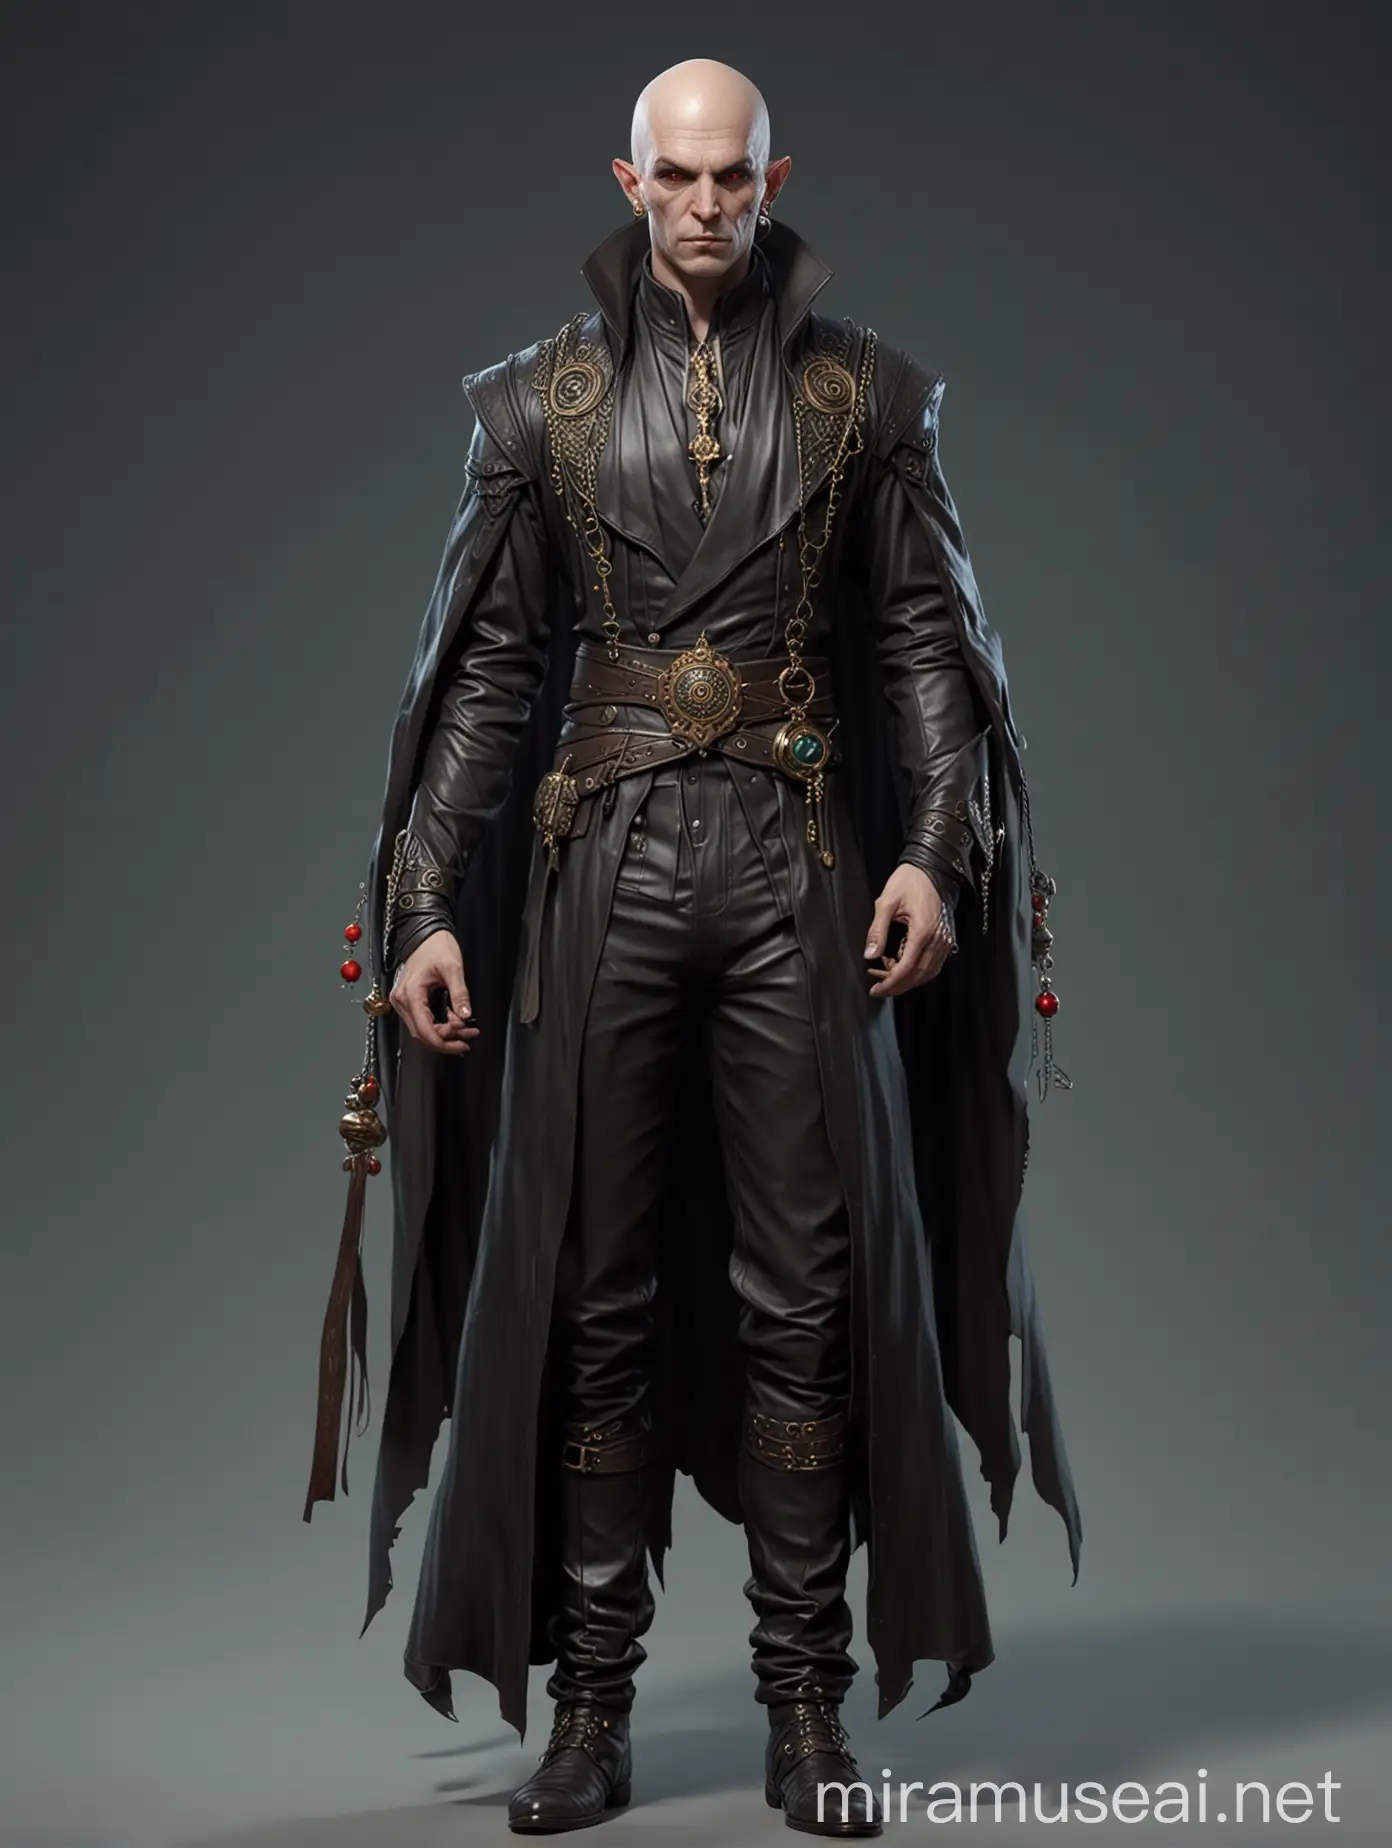 Evil warlock, bald head, slim robe, leather pants, ornaments, fantasy character design, fullbody